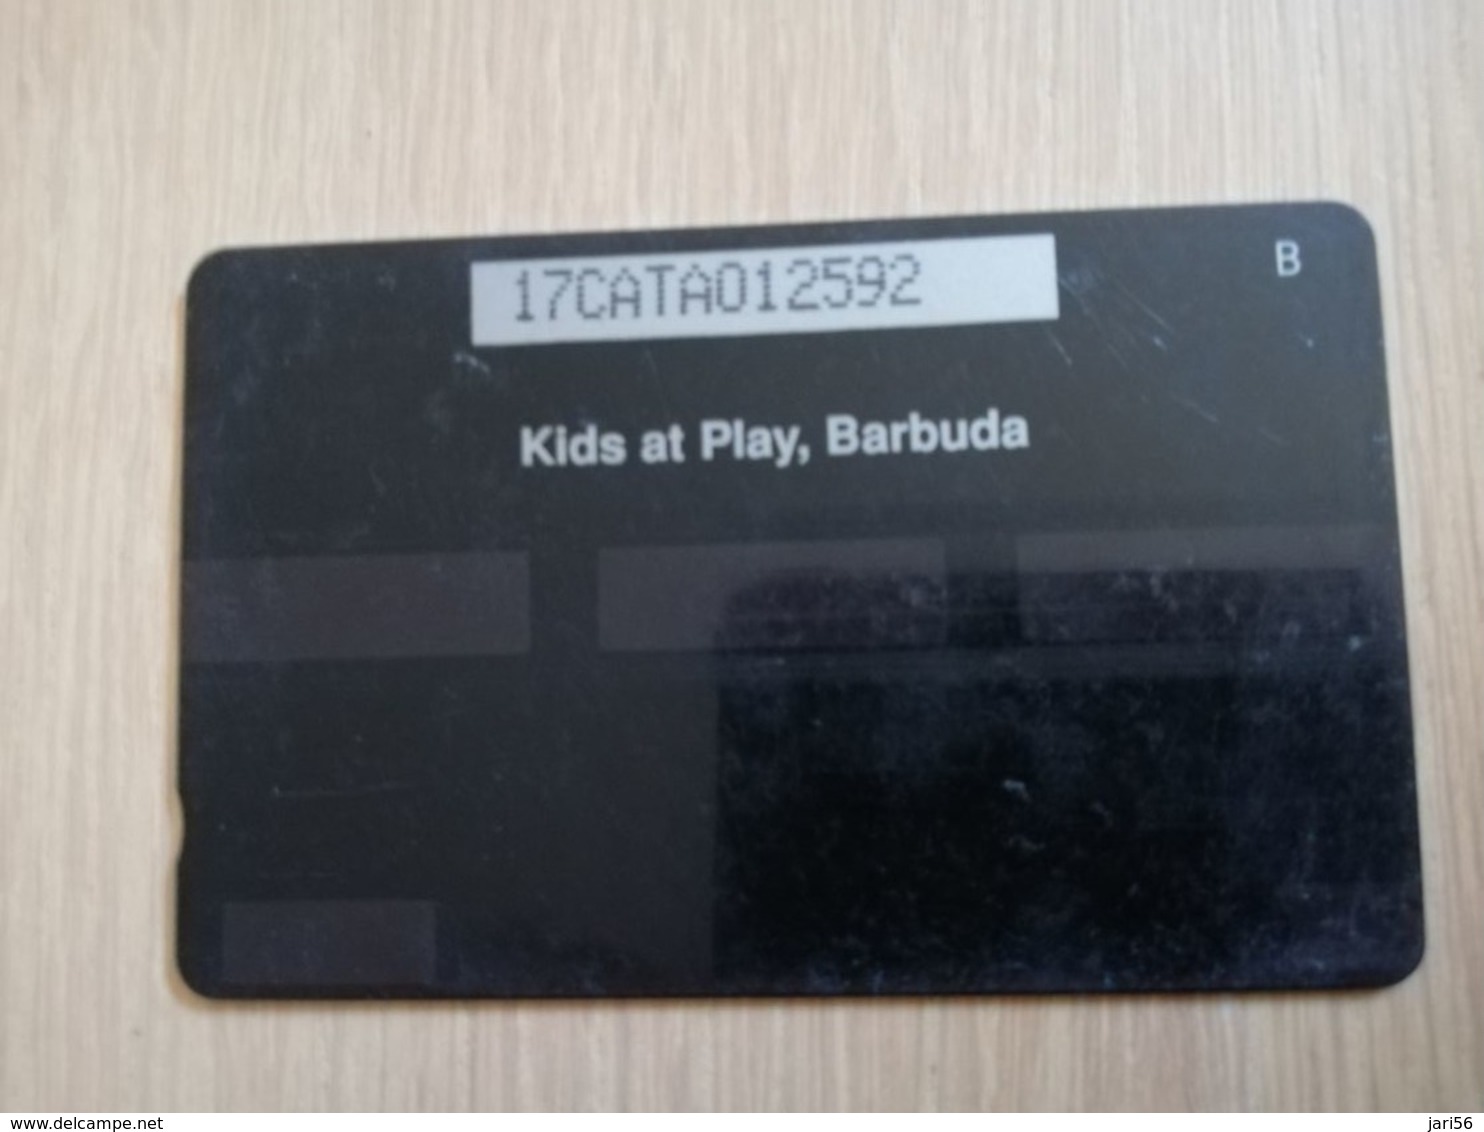 ANTIGUA & BARBUDA $ 10  BARBUDA KIDS AT PLAY         ANT-17A  CONTROL NR: 17CATA      NEW C&W LOGO **2546** - Antigua And Barbuda